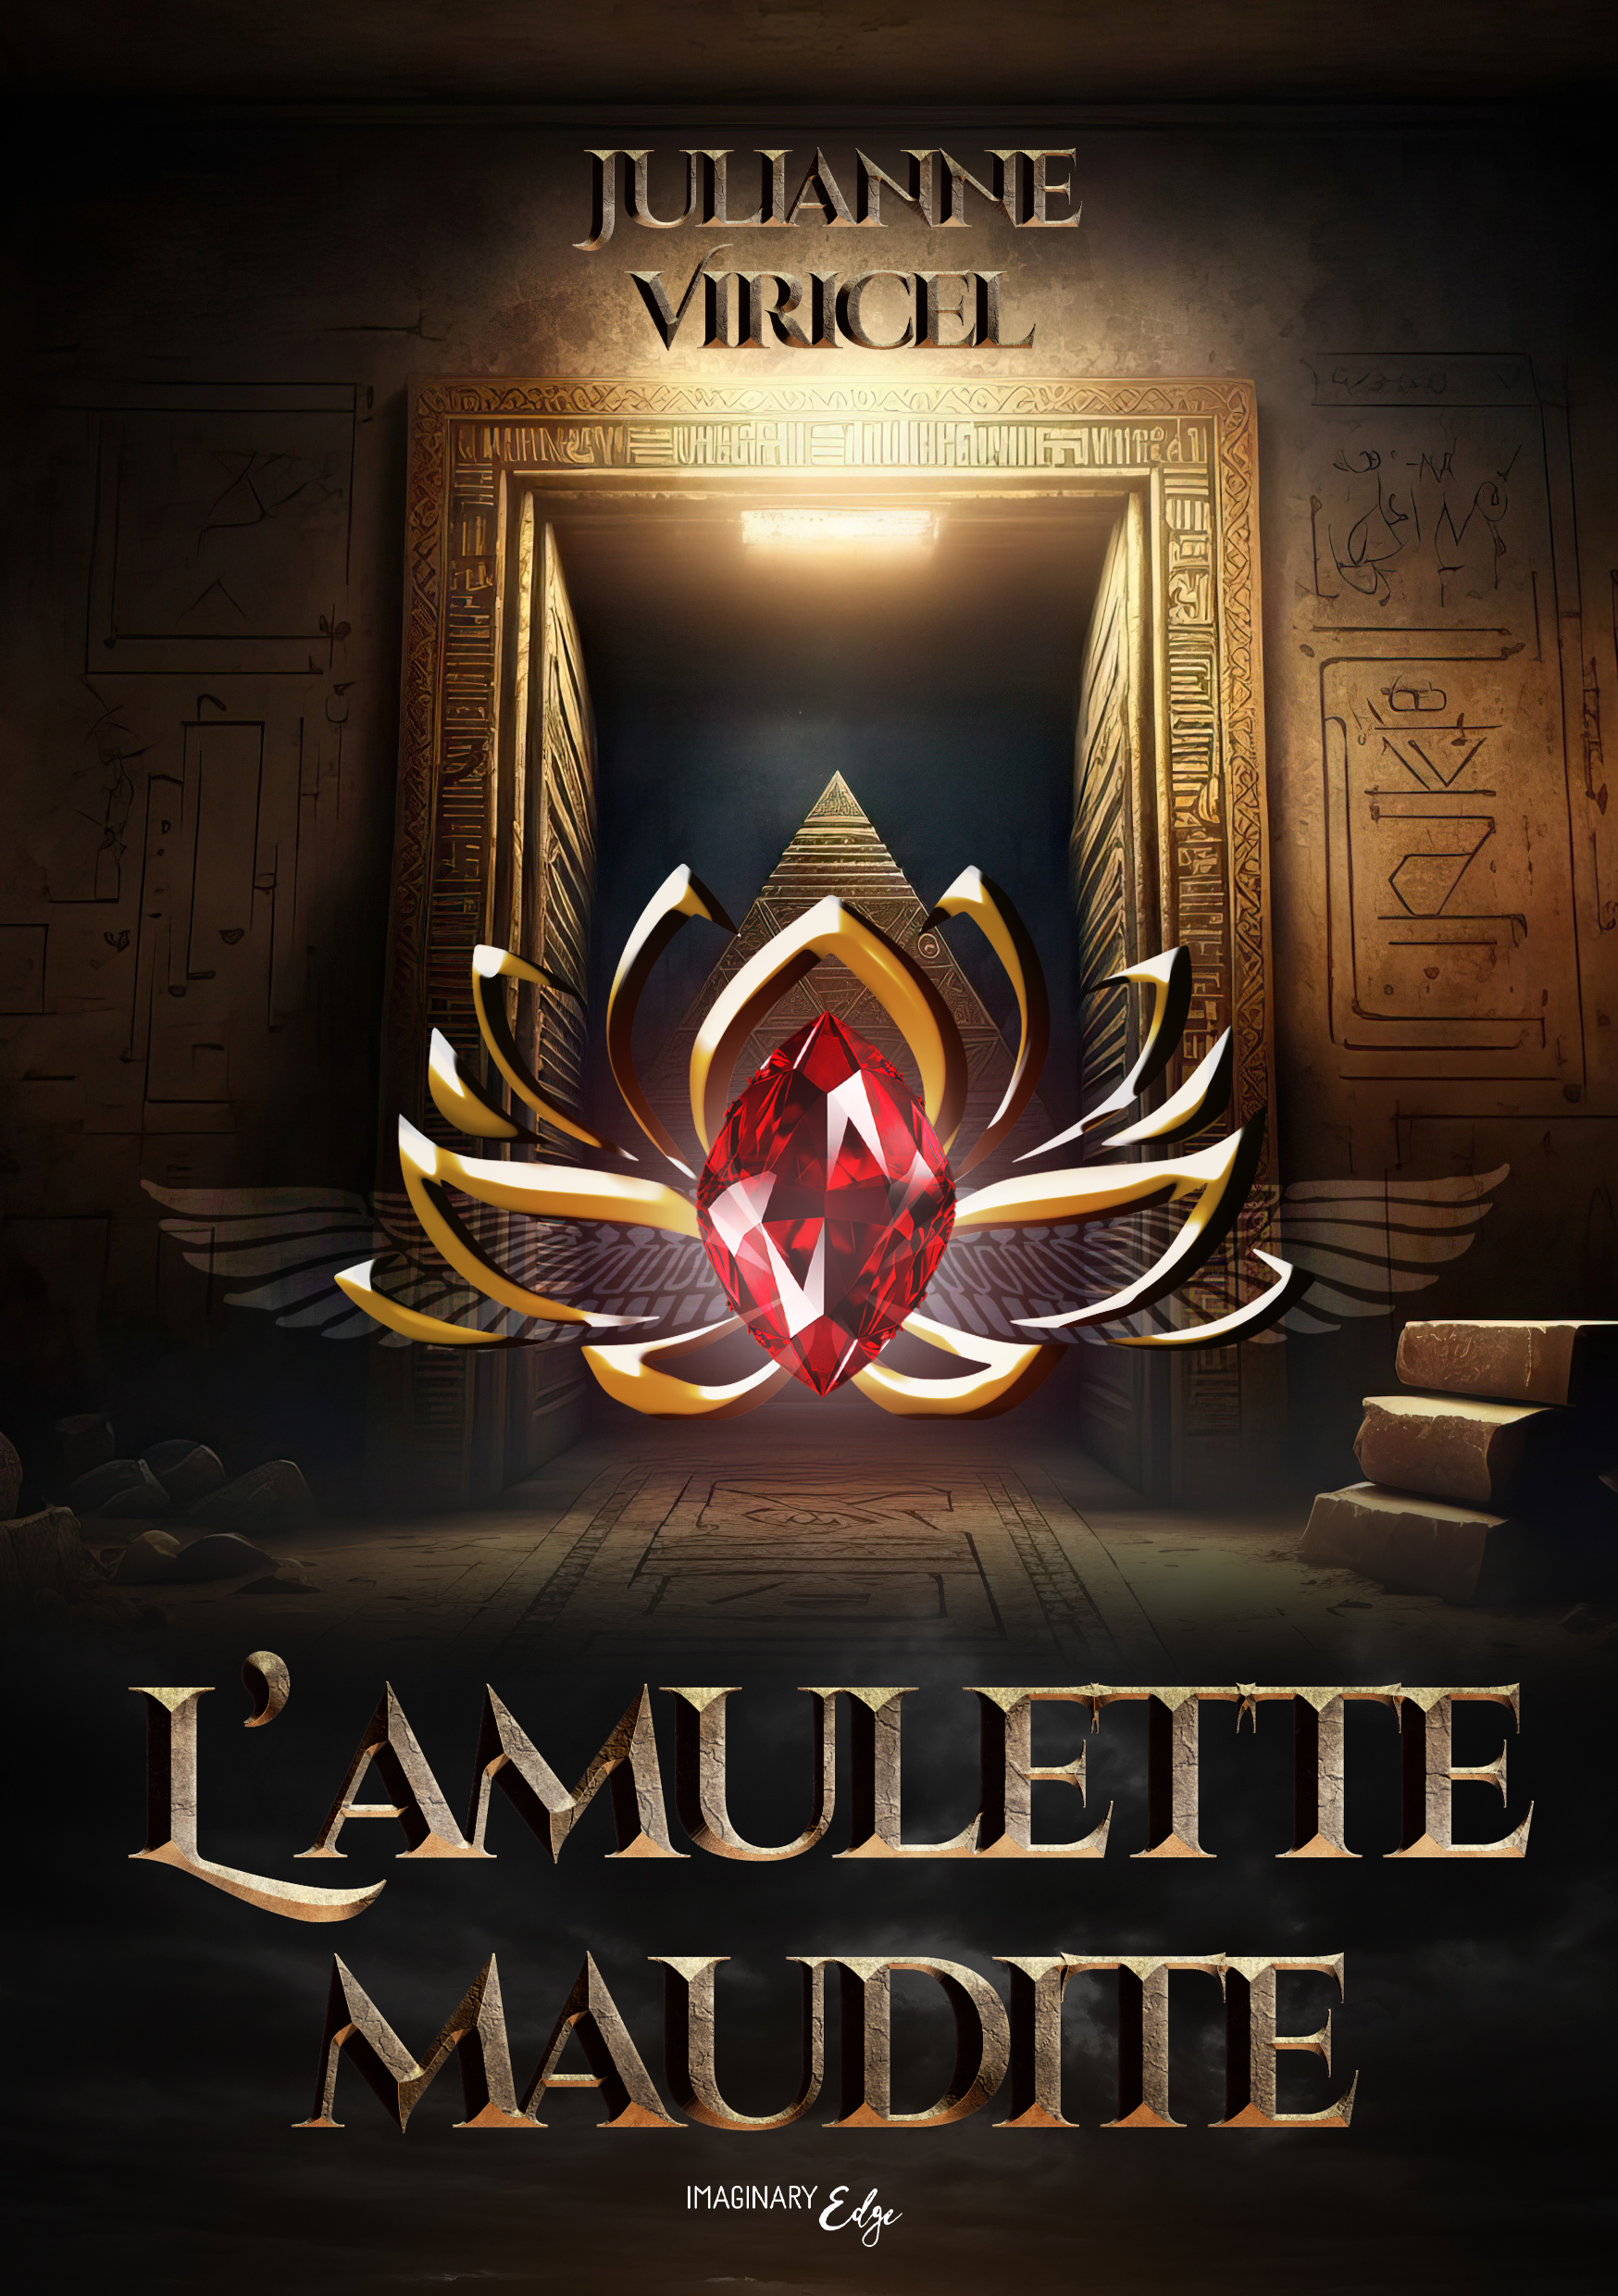 [Ebook]L’amulette maudite de Julianne Viricel